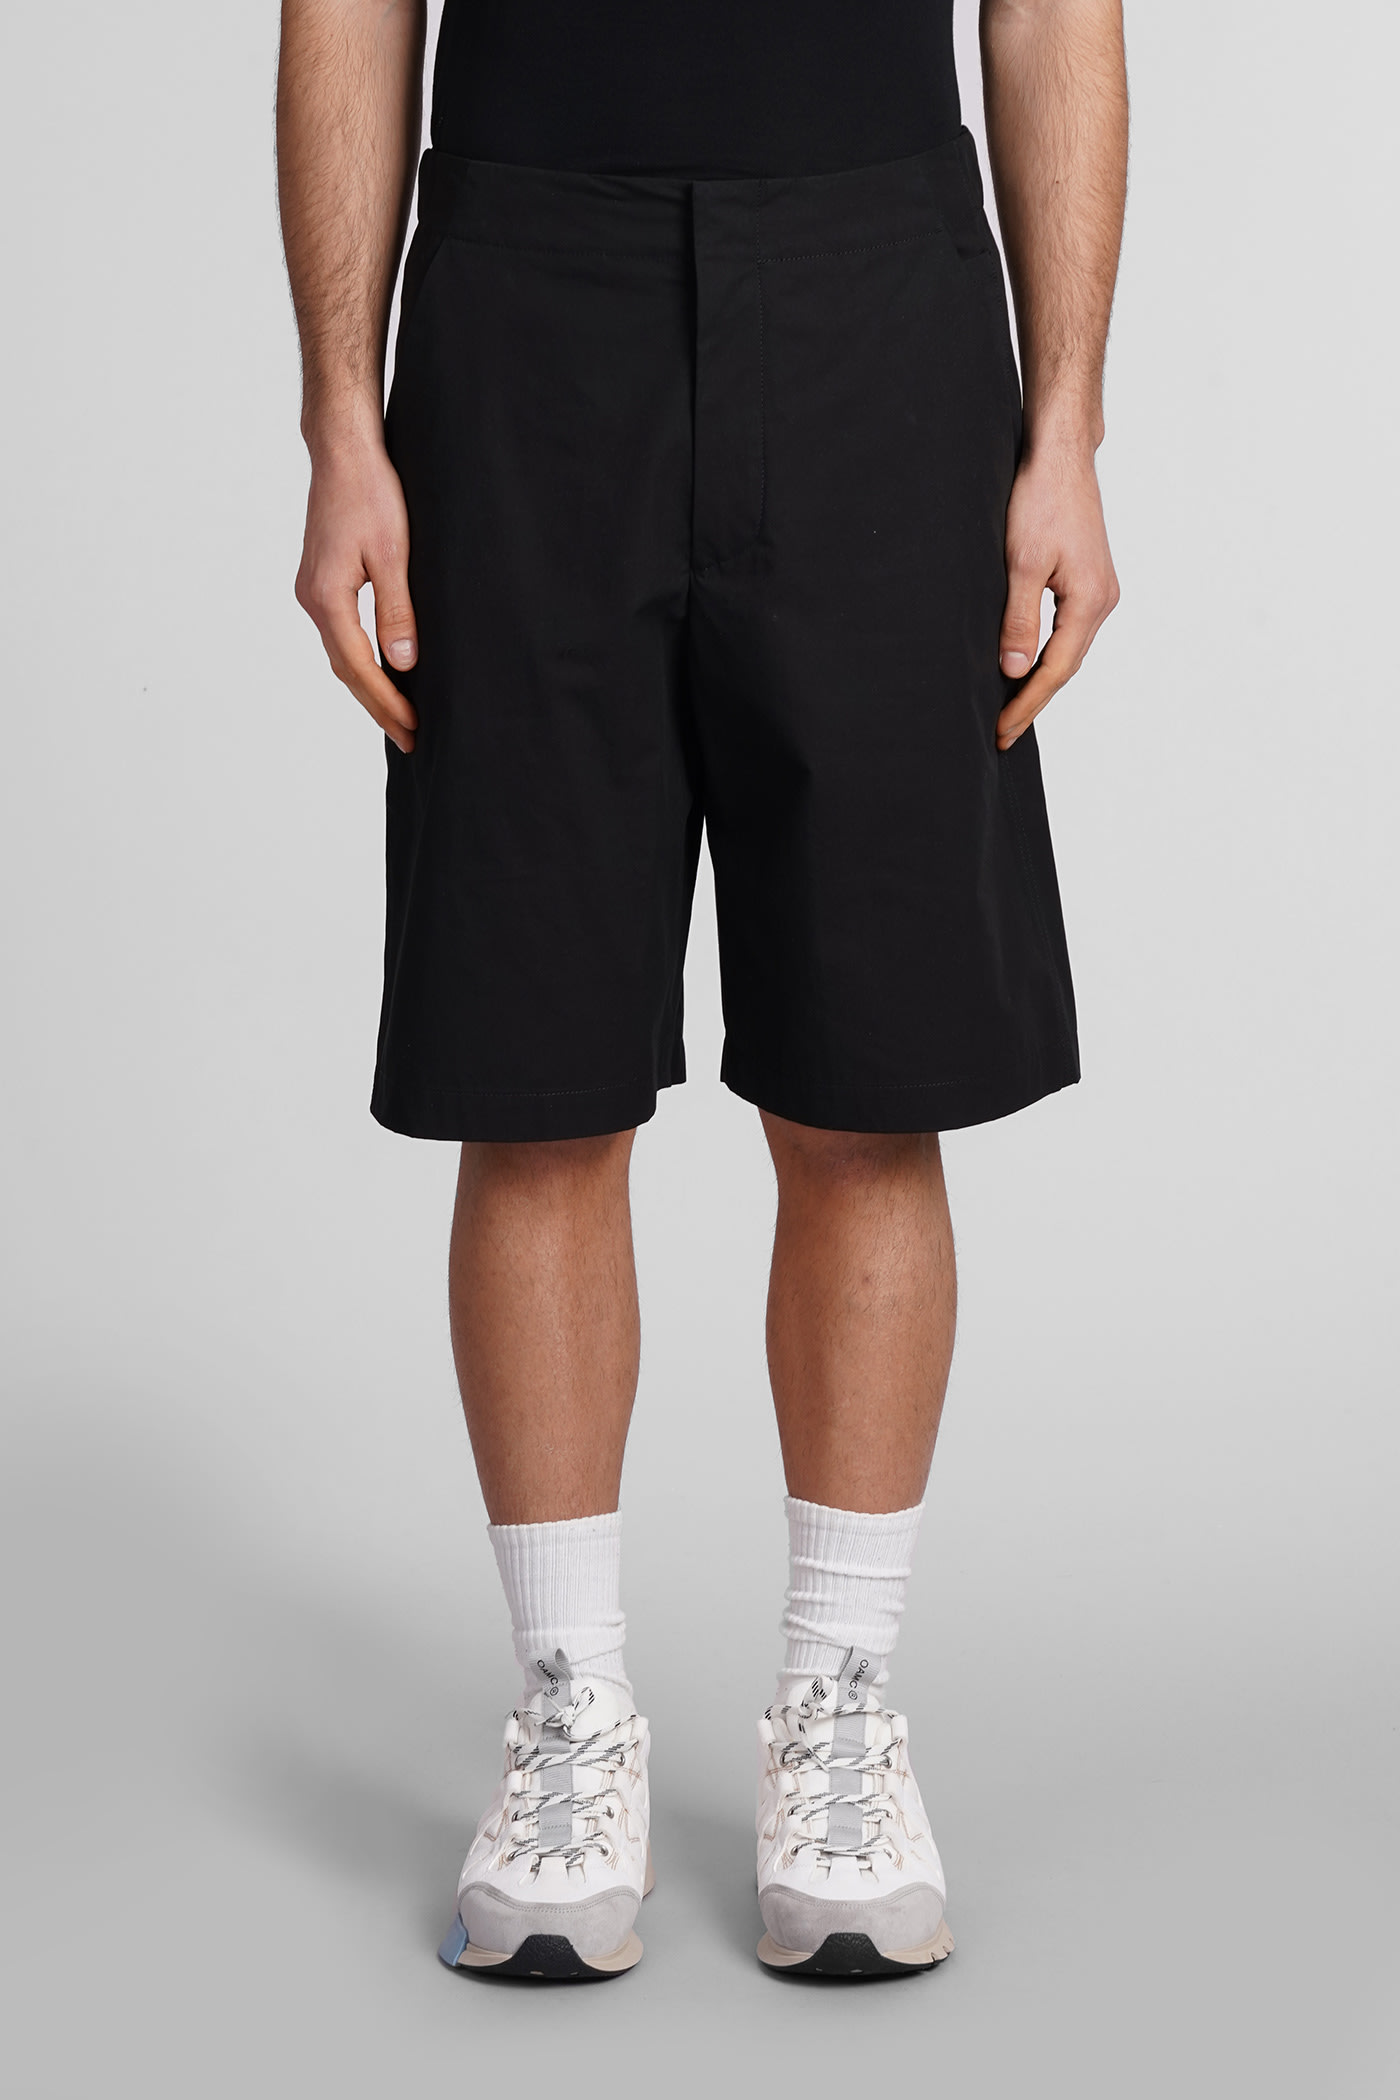 Vapor Shorts In Black Cotton